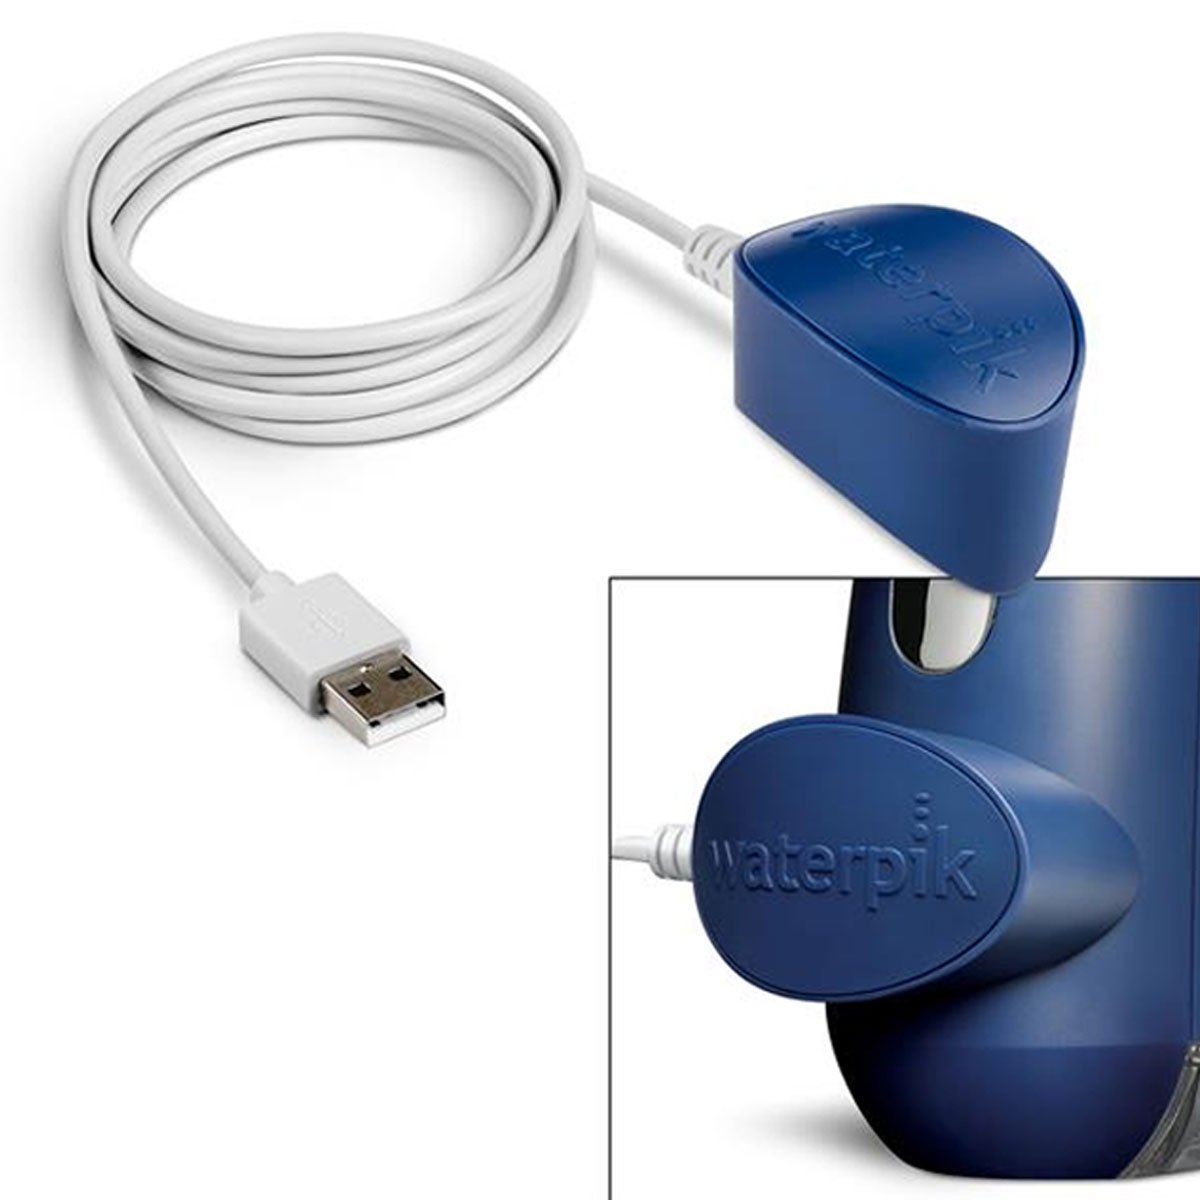 Waterpik Cordless Advanced 2.0 USB charger
